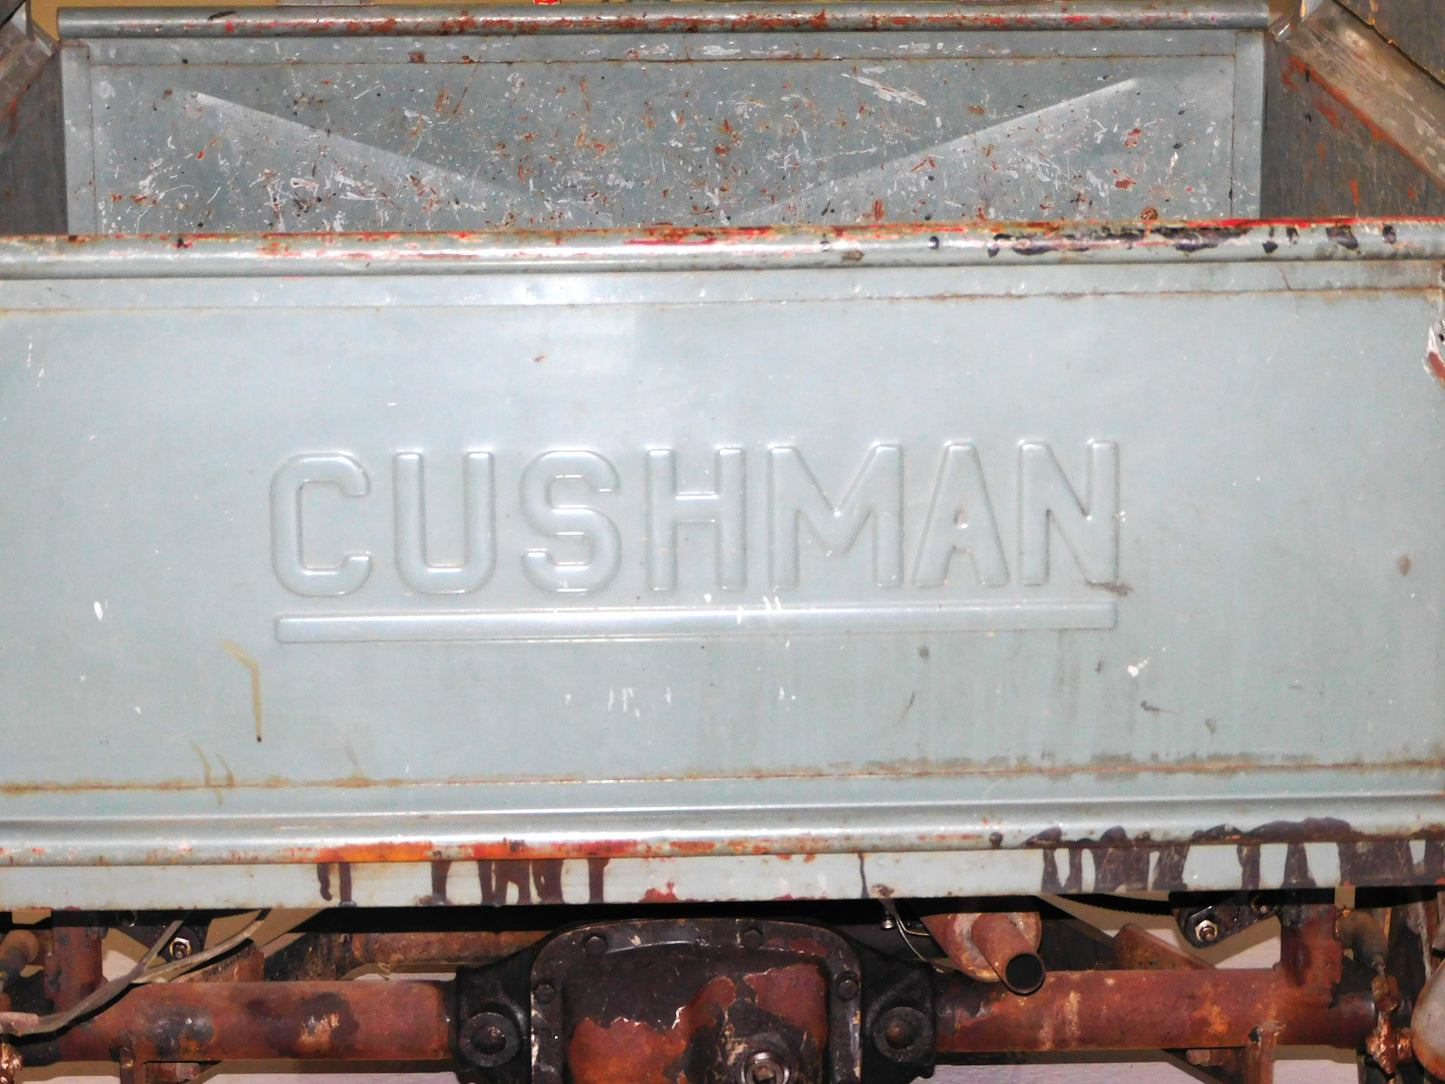 1956 Cushman 780 Truckster